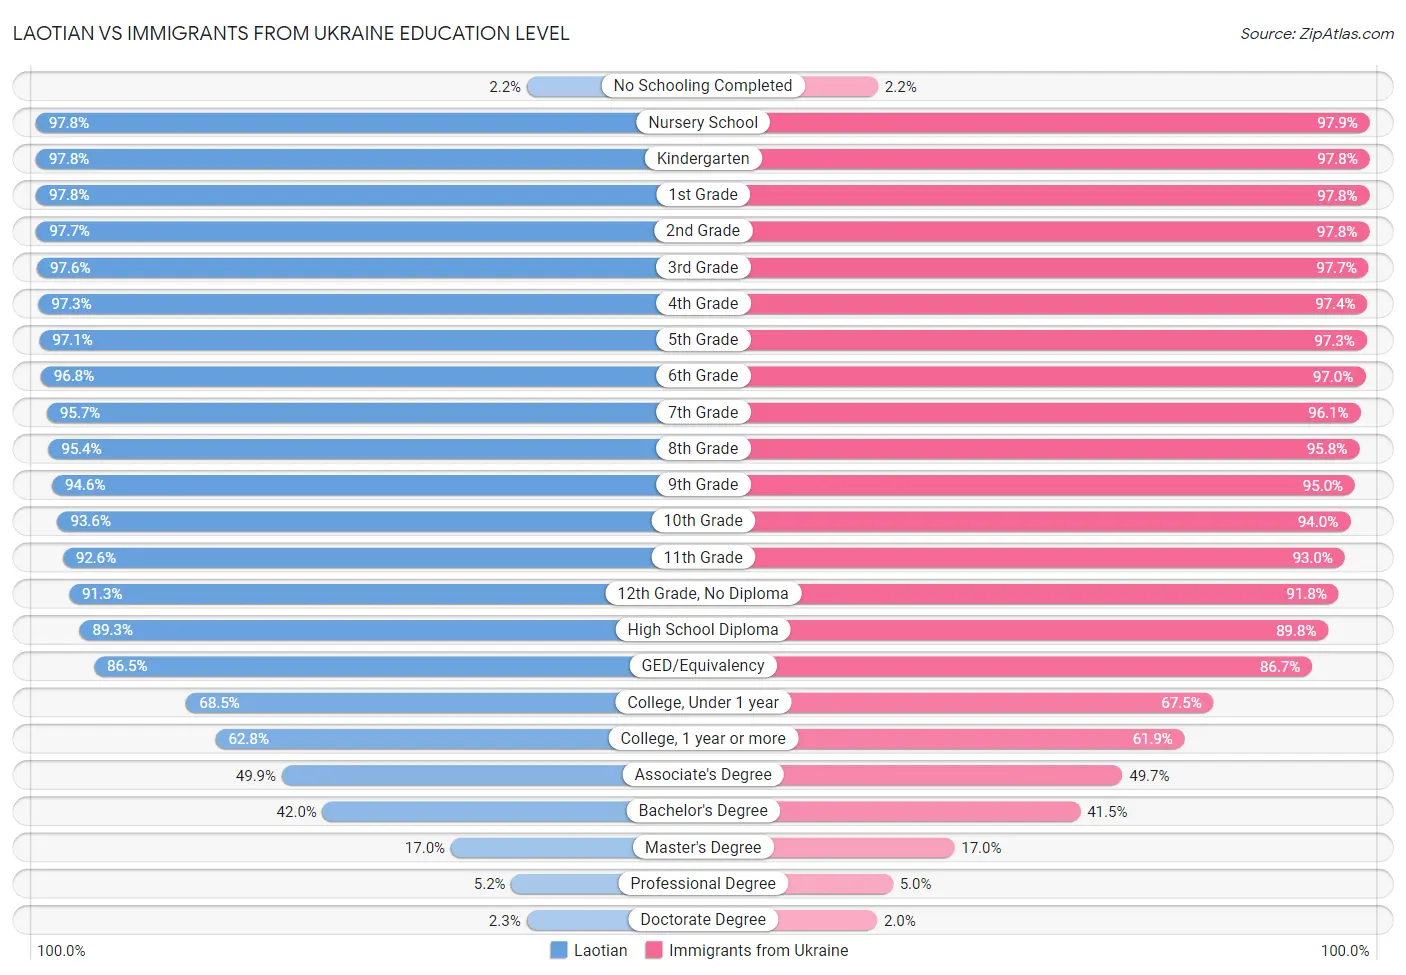 Laotian vs Immigrants from Ukraine Education Level